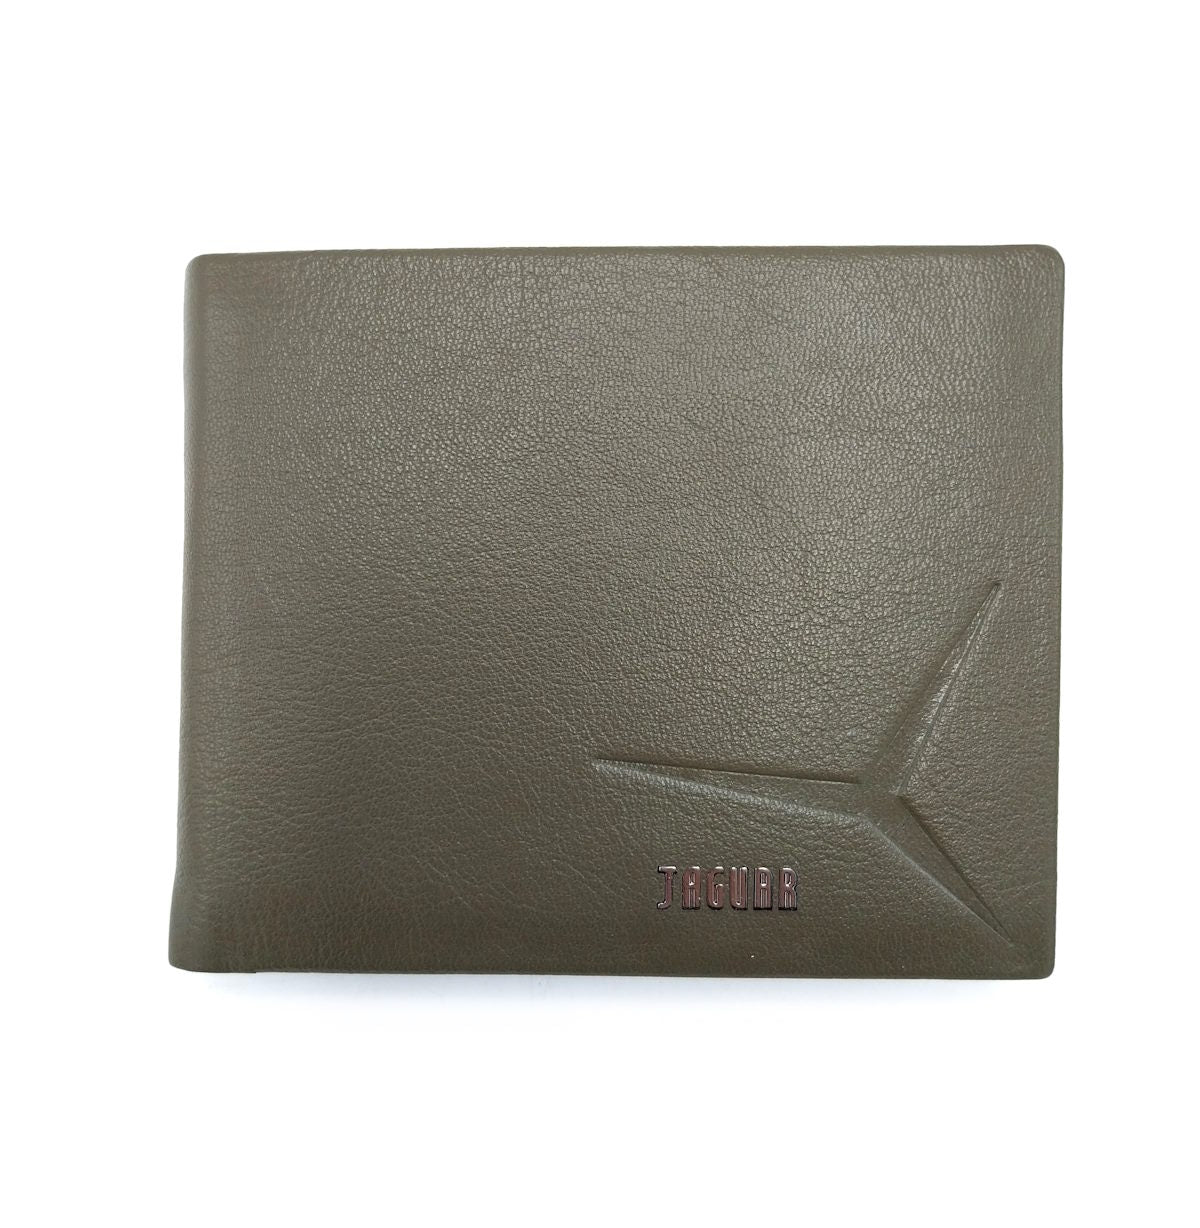 Genuine leather wallet, Jaguar, art. PF800-9